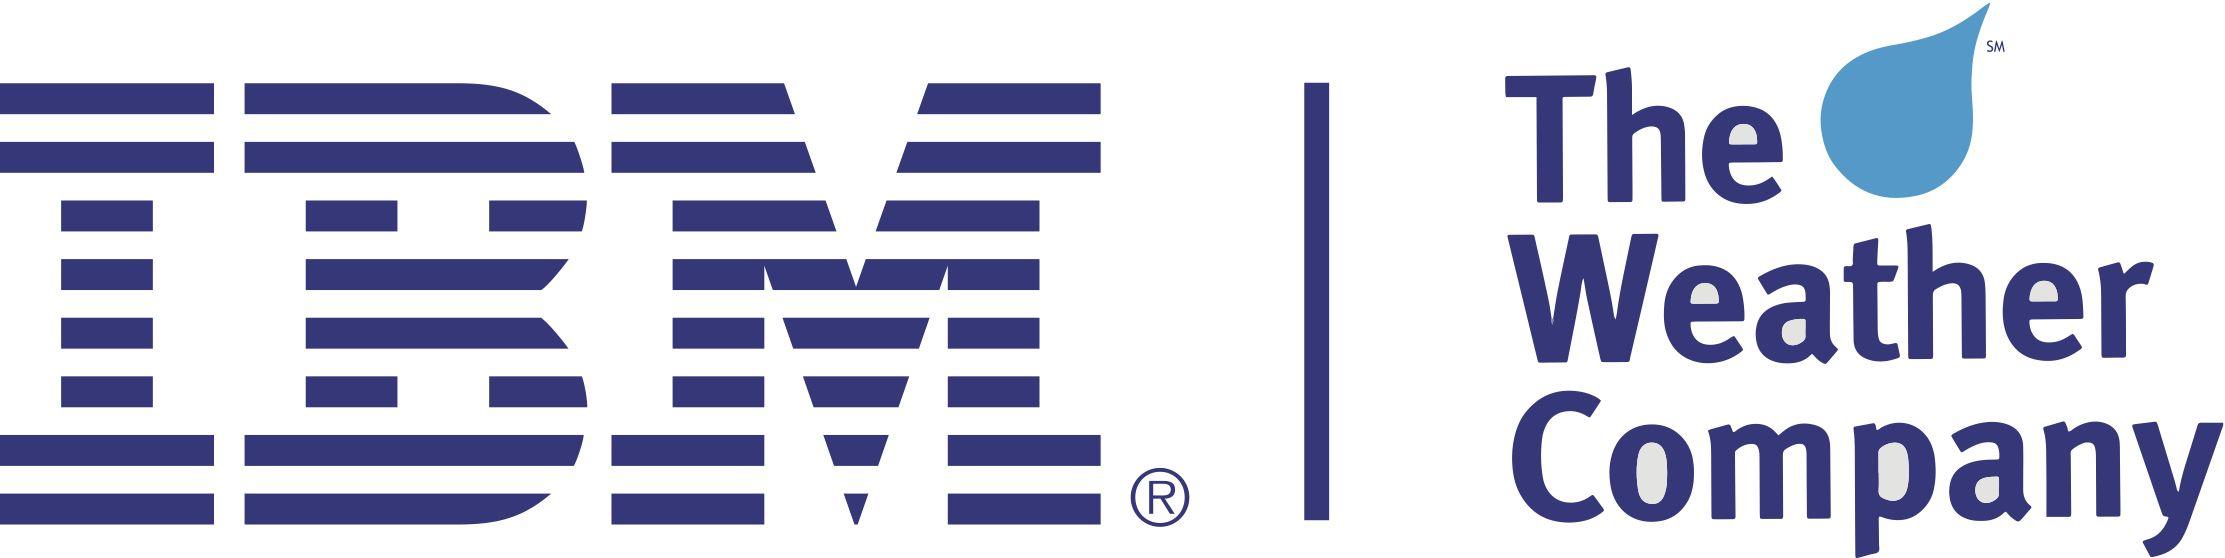 IBM Company Logo - IBM News room and The Weather Company Logo